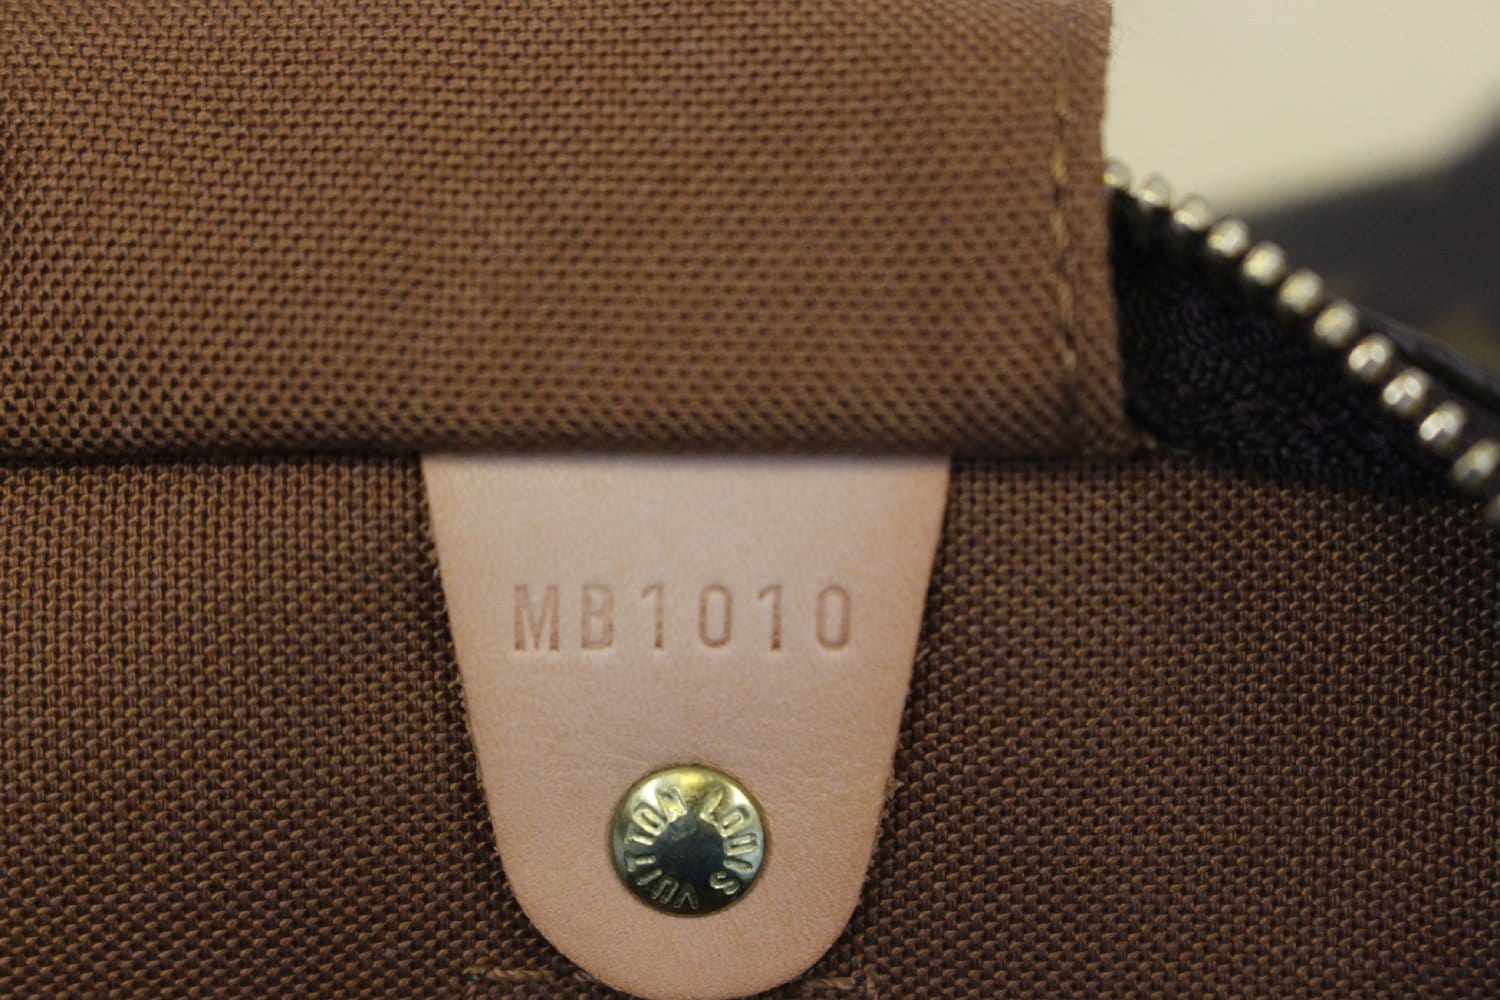 Louis Vuitton LV Hand Bag Speedy 40 Brown Monogram 1353711